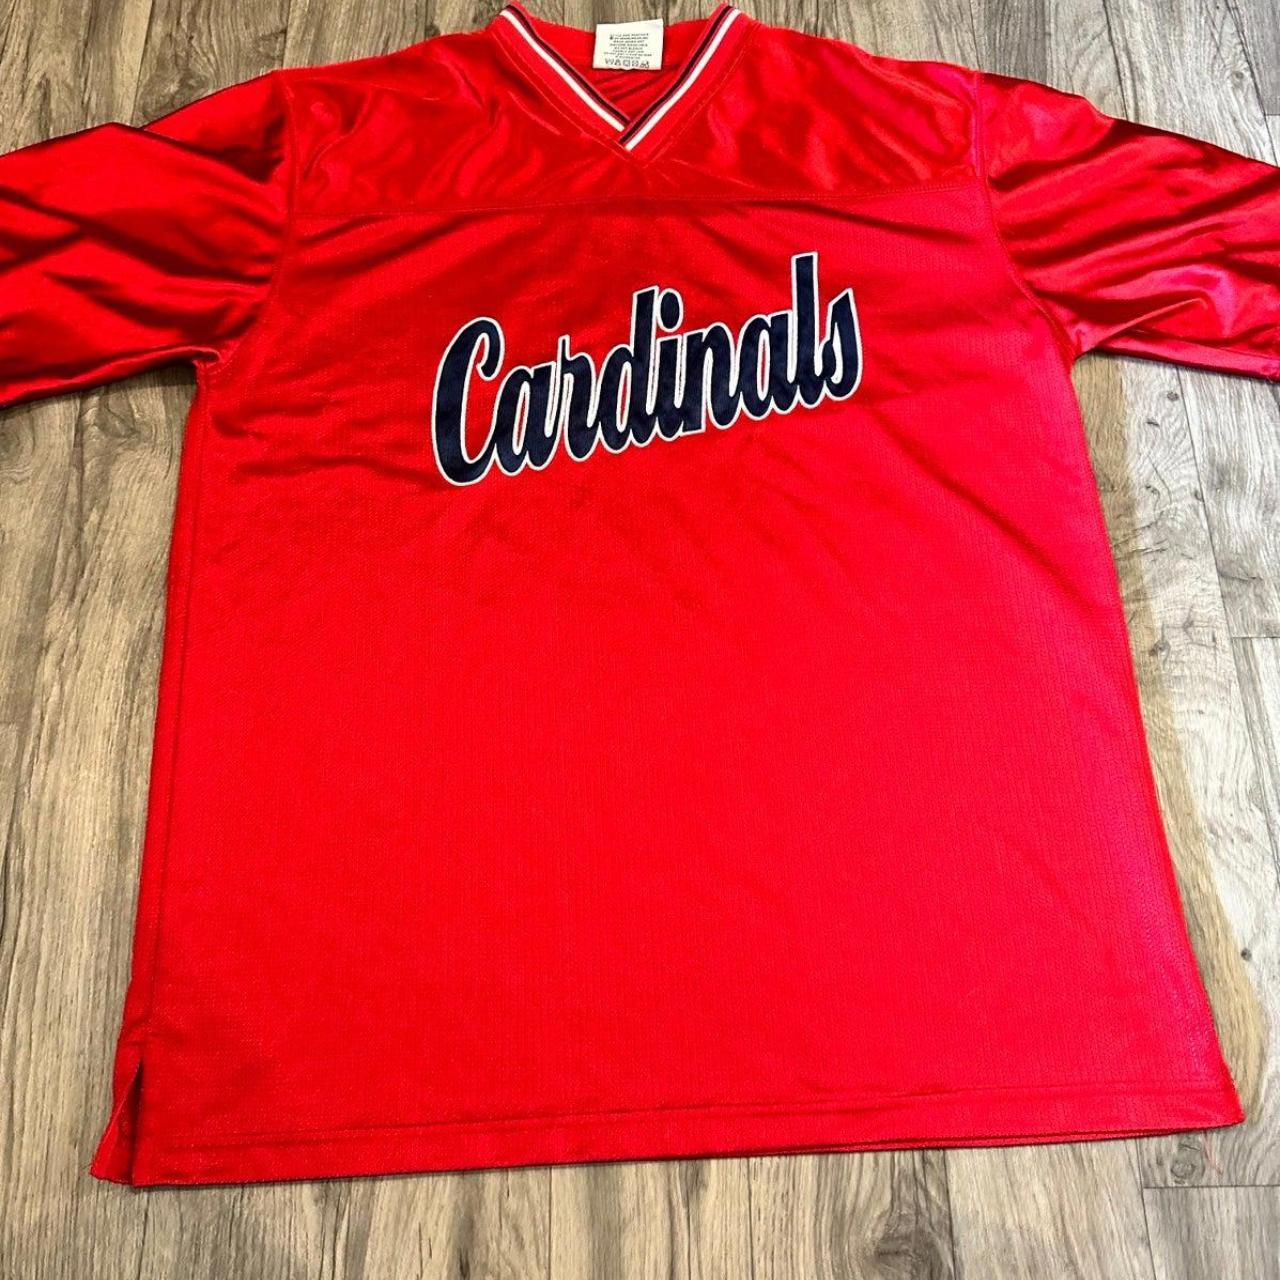 Dynasty St. Louis Cardinals Active Jerseys for Men